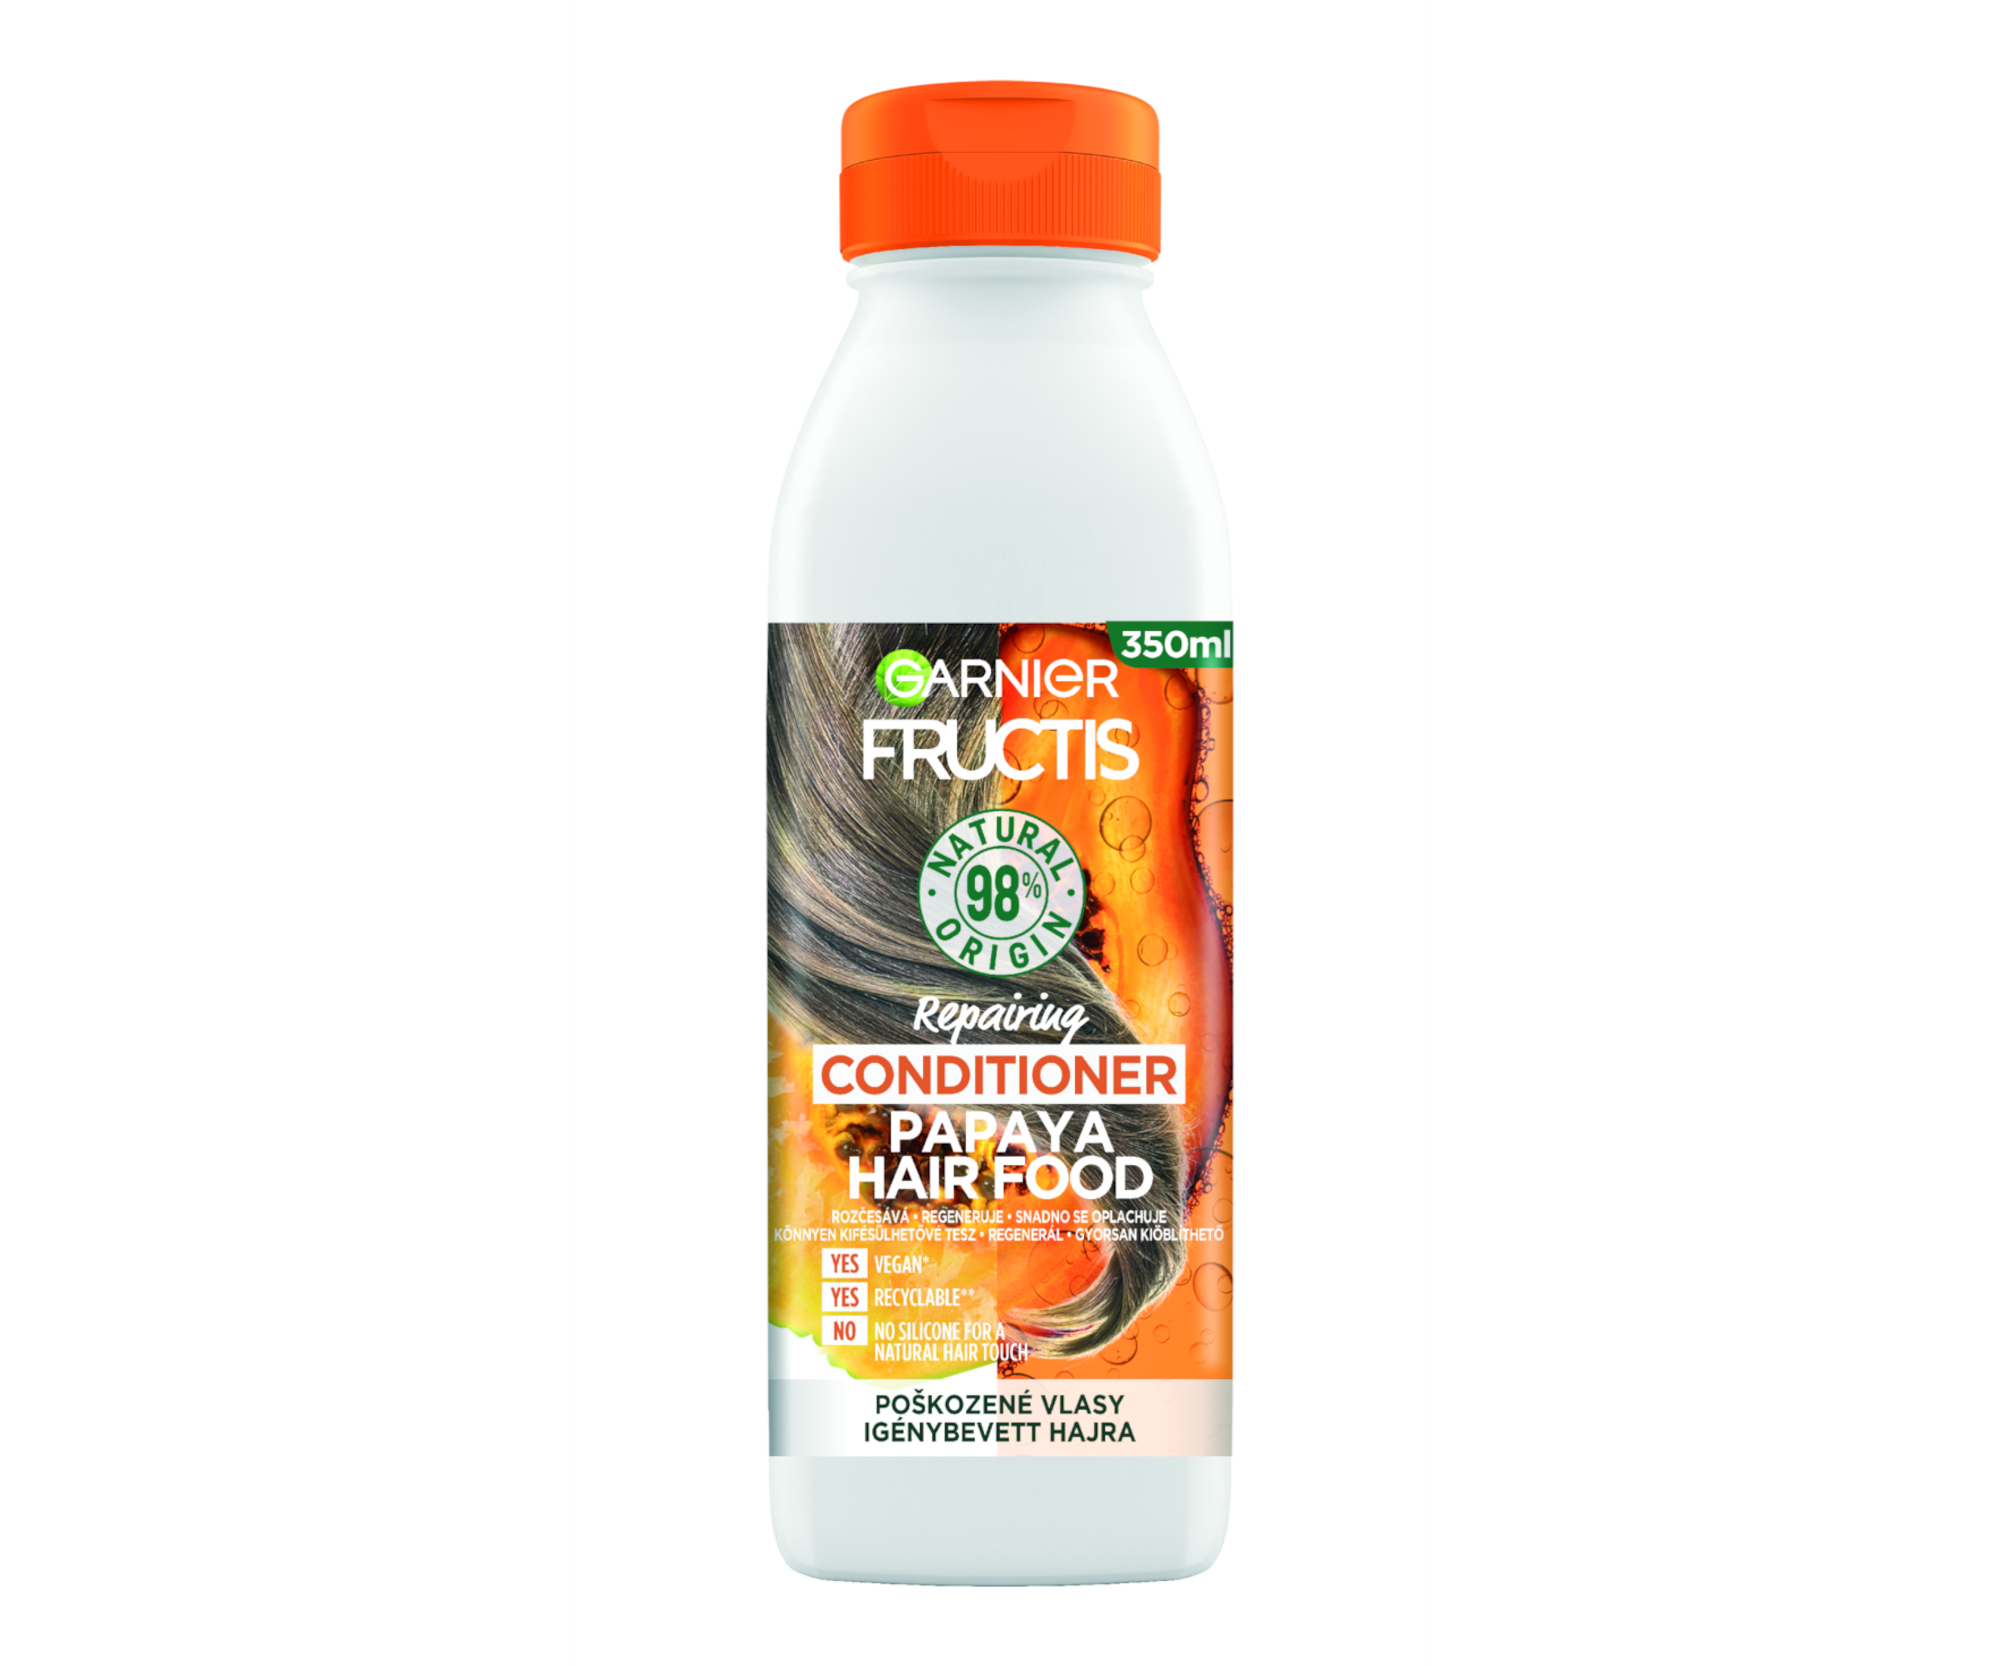 Regenerační kondicionér pro poškozené vlasy Garnier Fructis Papaya Hair Food - 350 ml + dárek zdarma